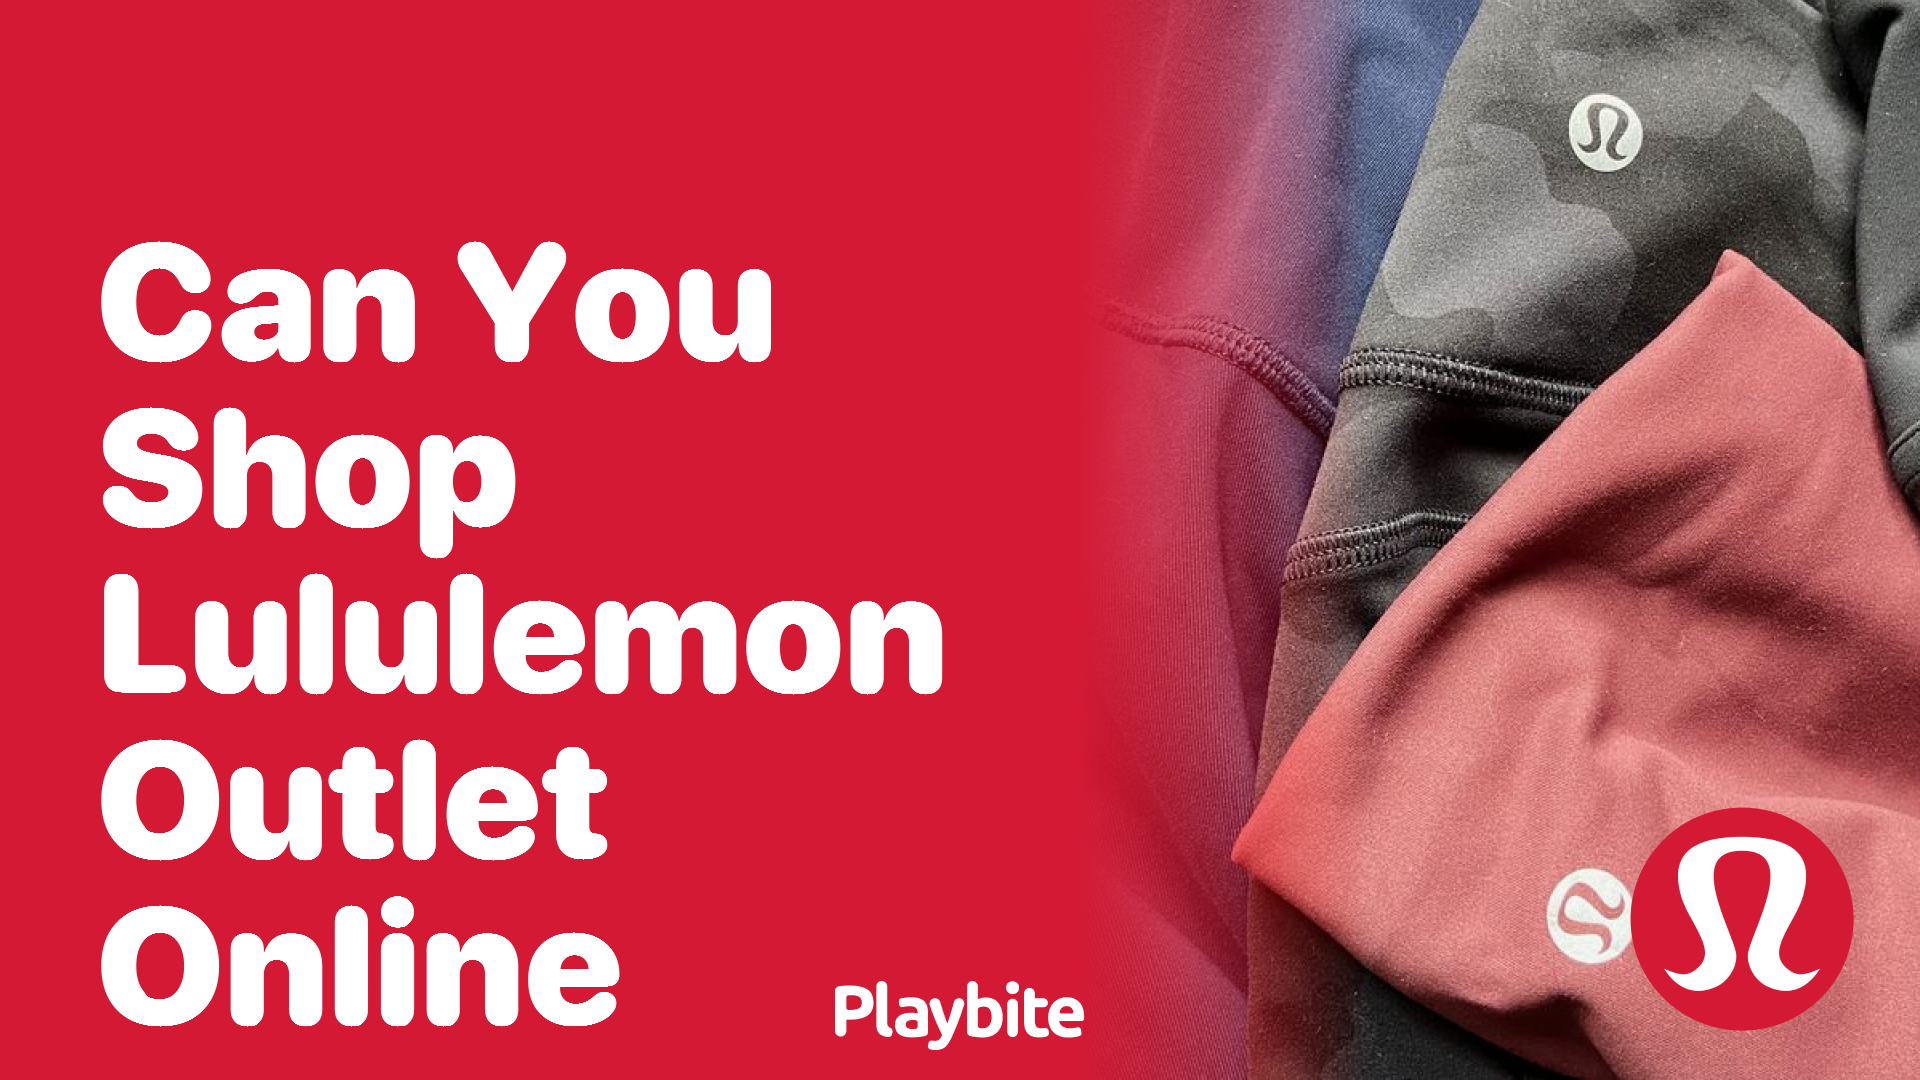 Can You Shop Lululemon Outlet Online? - Playbite